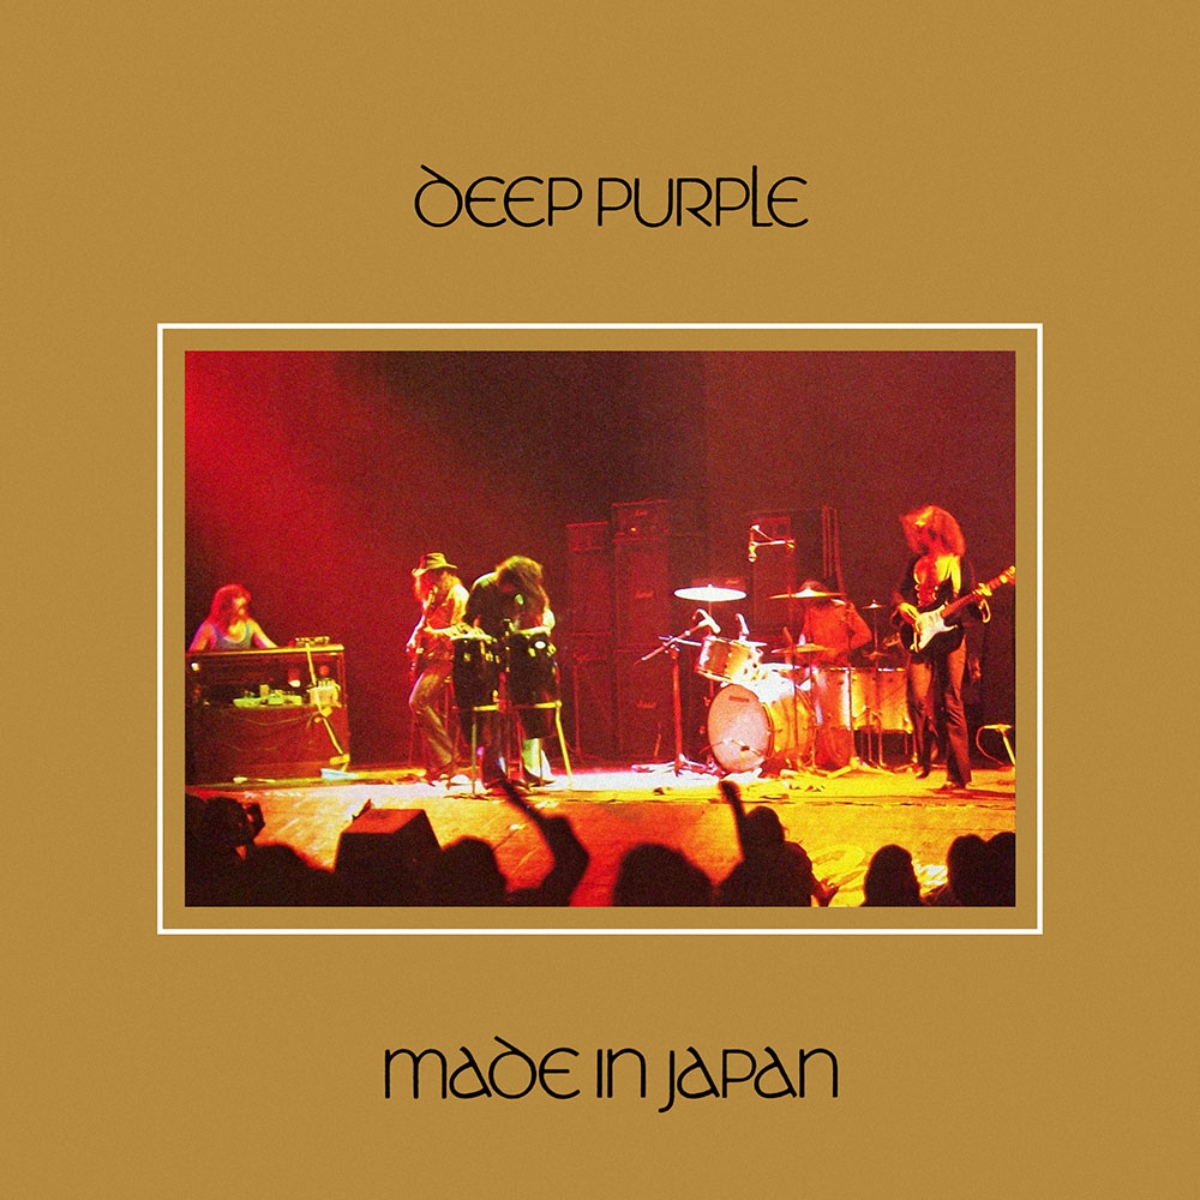 Deep Purple - "Made in Japan" (Albumcover)